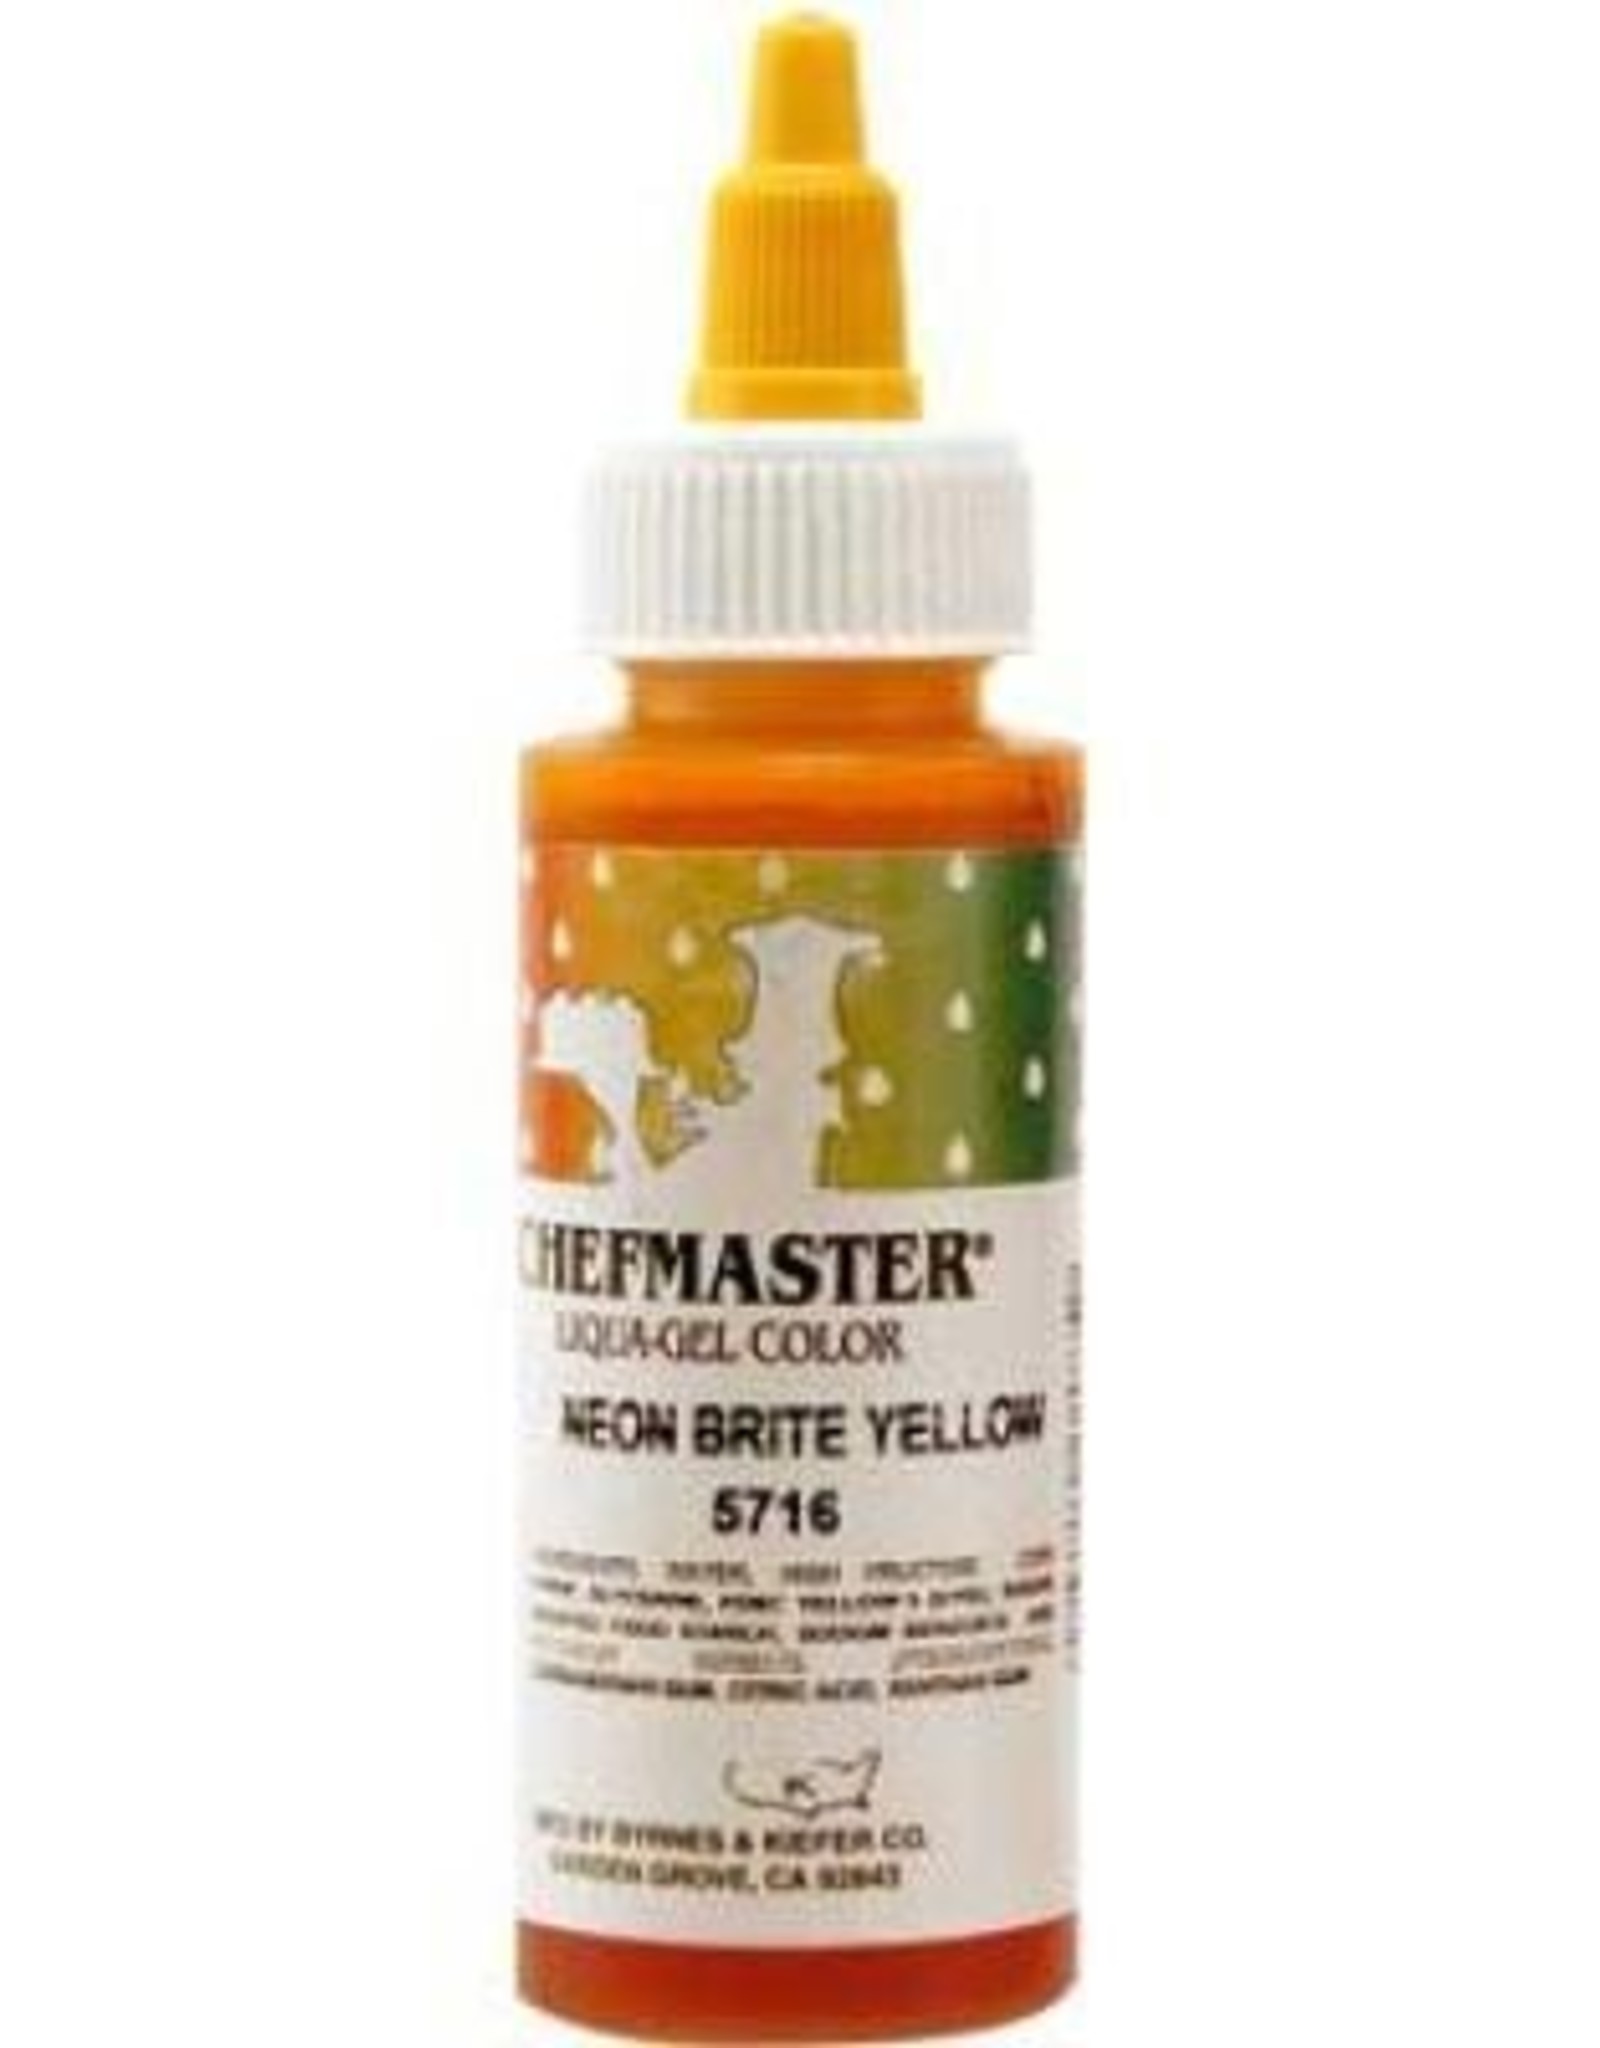 Neon Yellow Chefmaster Liqua-gel 2.3 oz.